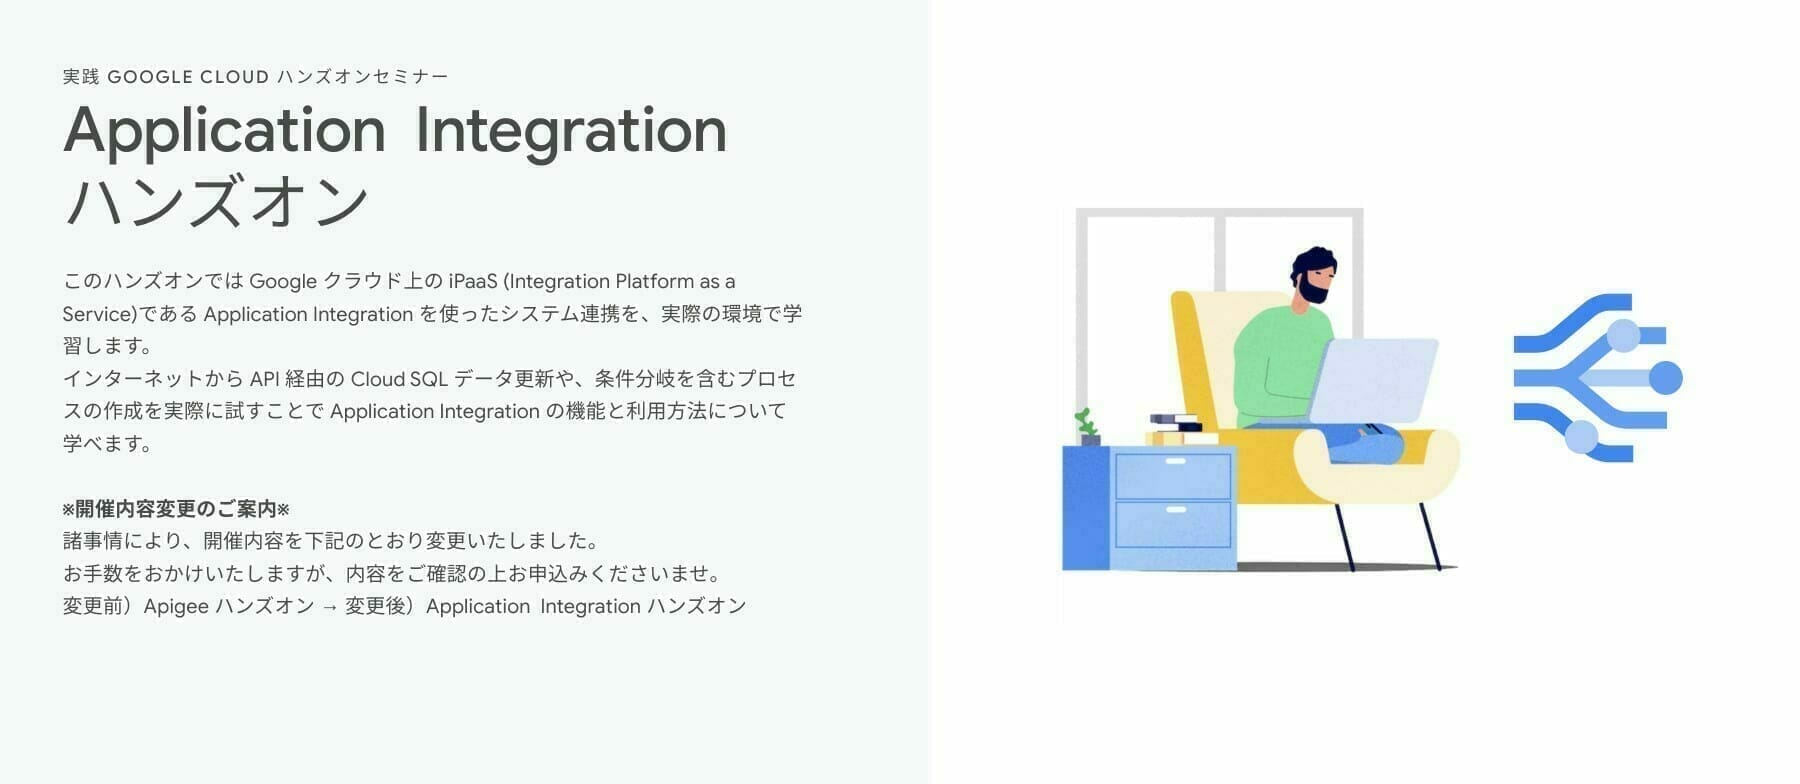 [Google Cloud] Application Integration ハンズオン